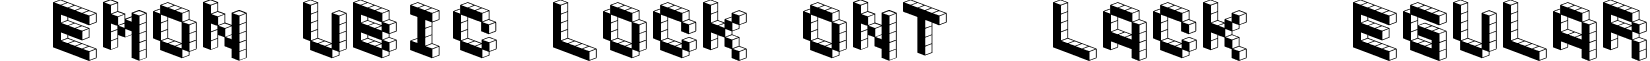 DemonCubicBlockFont Black Regular cubicblock_b.ttf